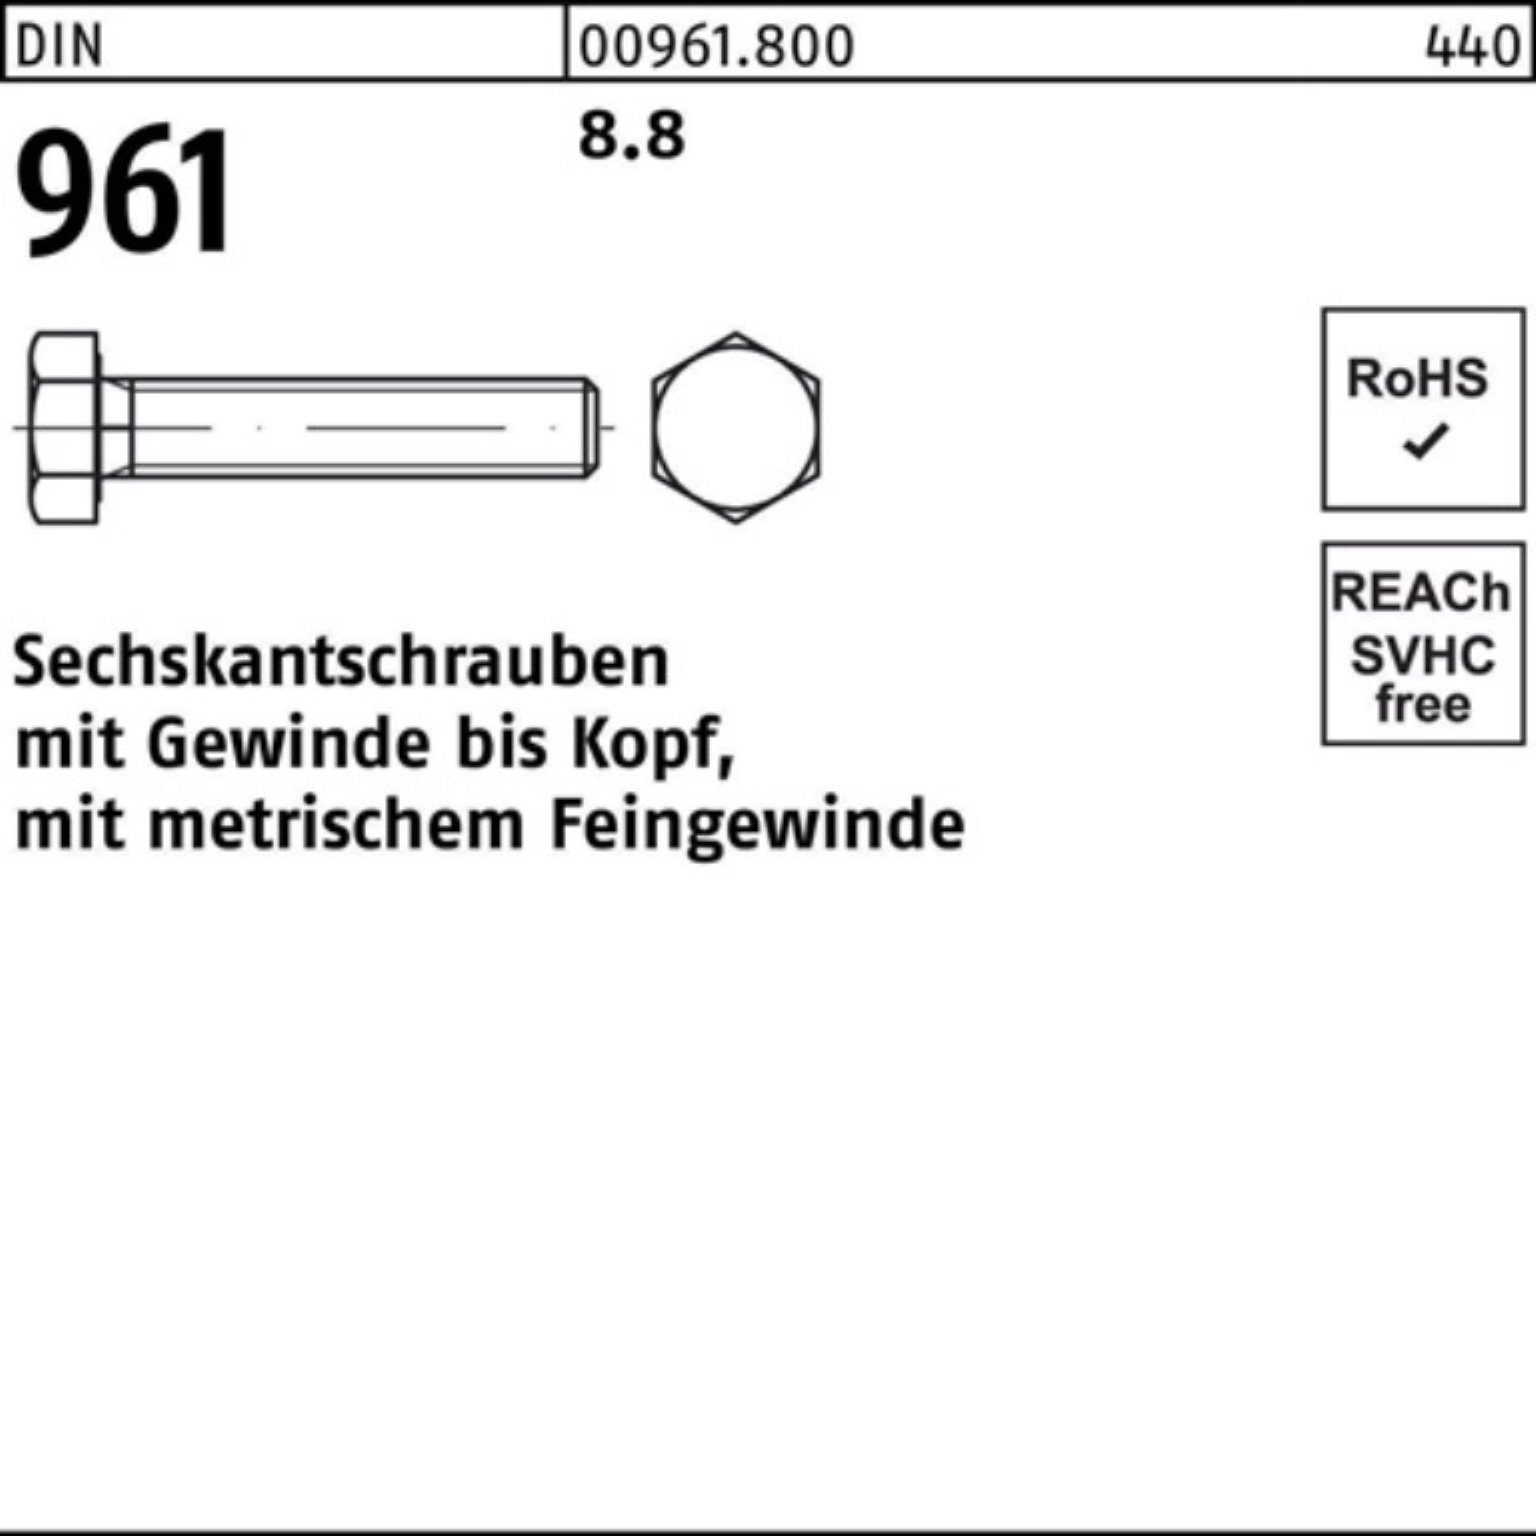 100er DIN 100 Reyher Sechskantschraube Sechskantschraube 40 Pack Stück VG M10x1,25x 961 8.8 DI